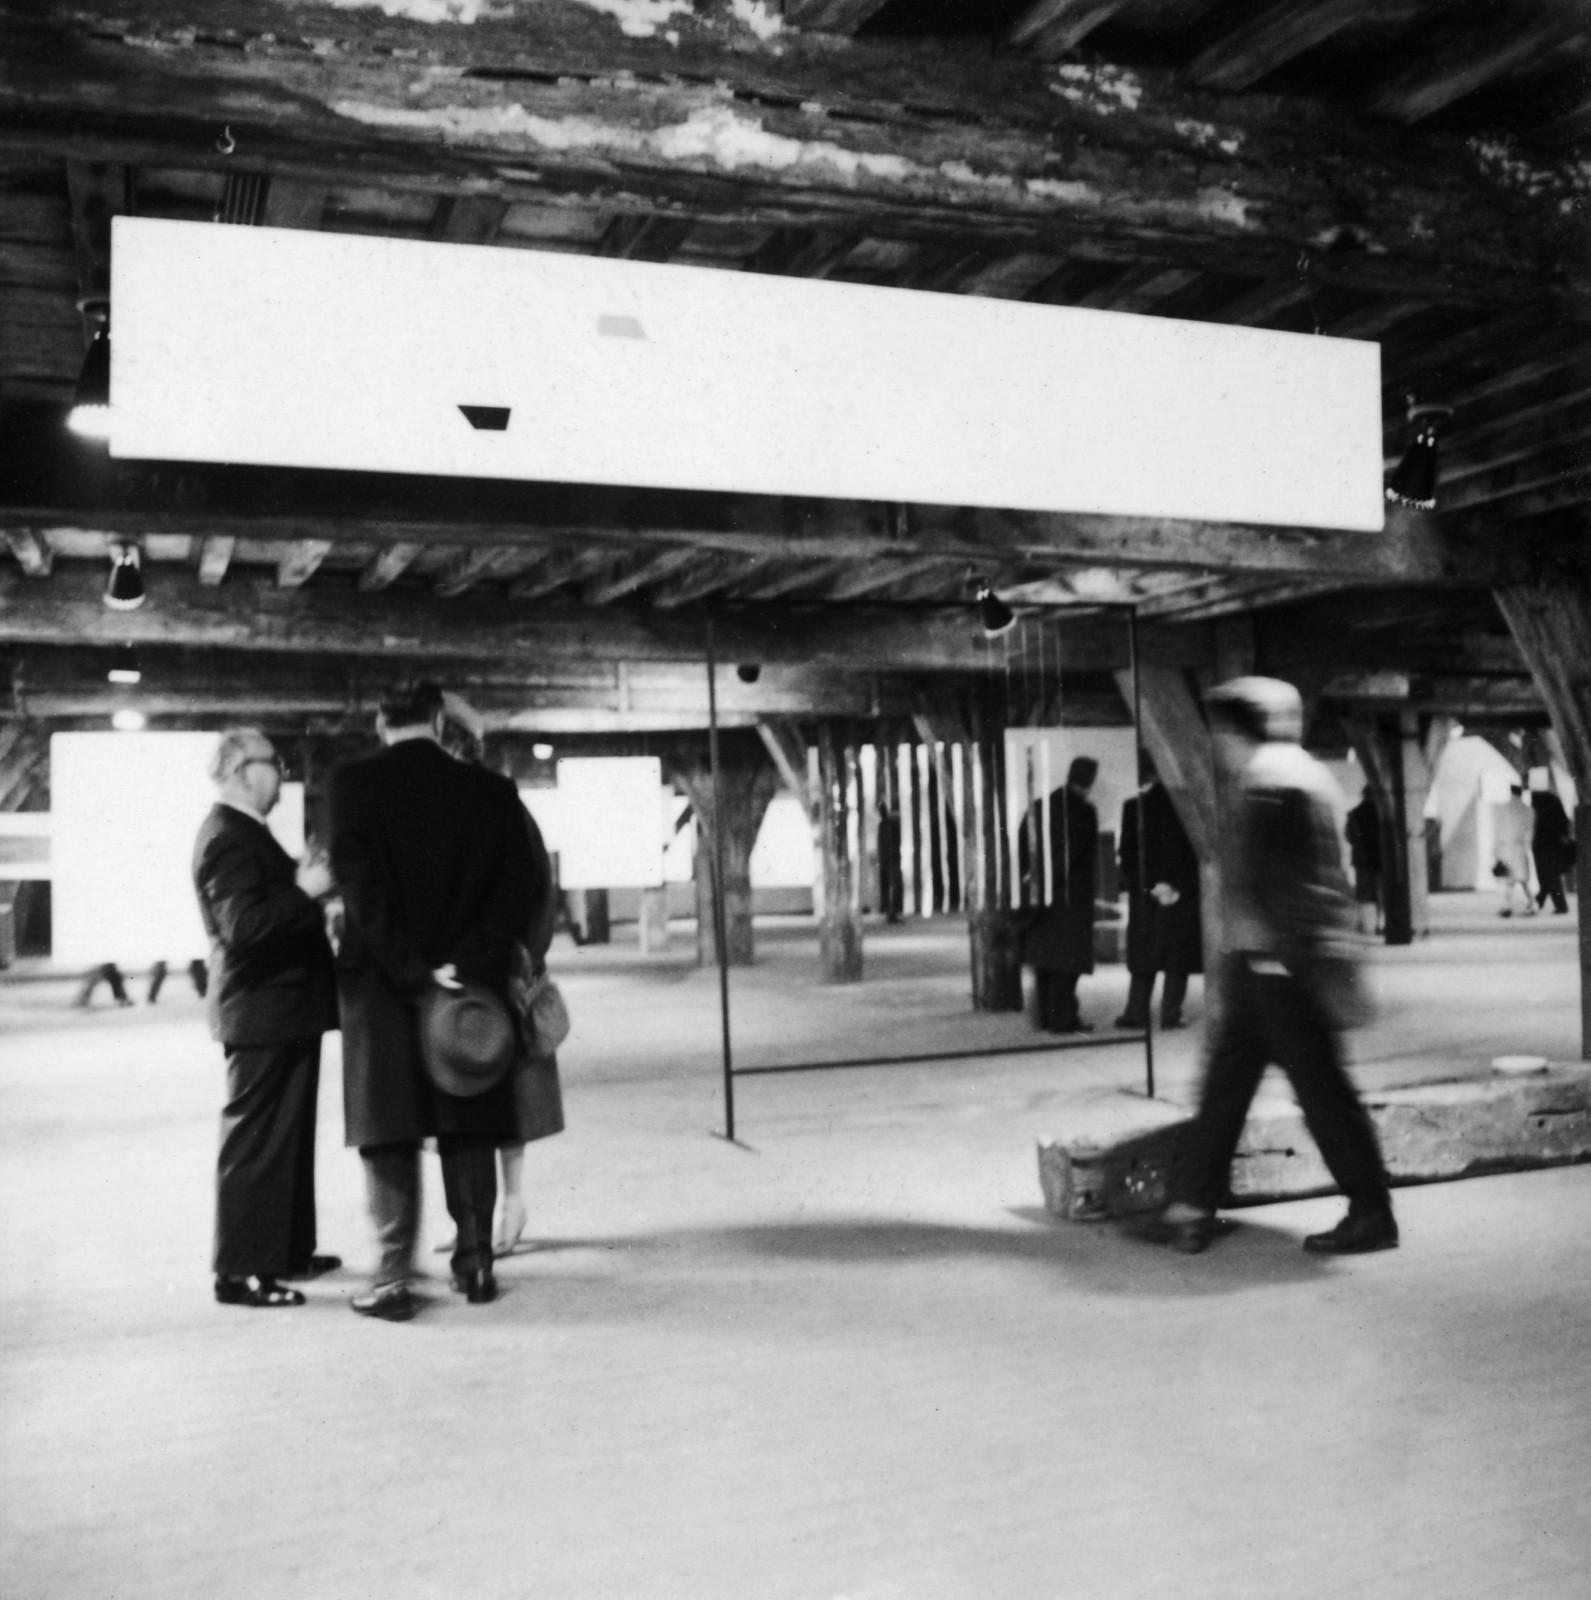 Vernissage de l'exposition "Vision in motion - motion in vision", Hessenhuis, Anvers, 1959